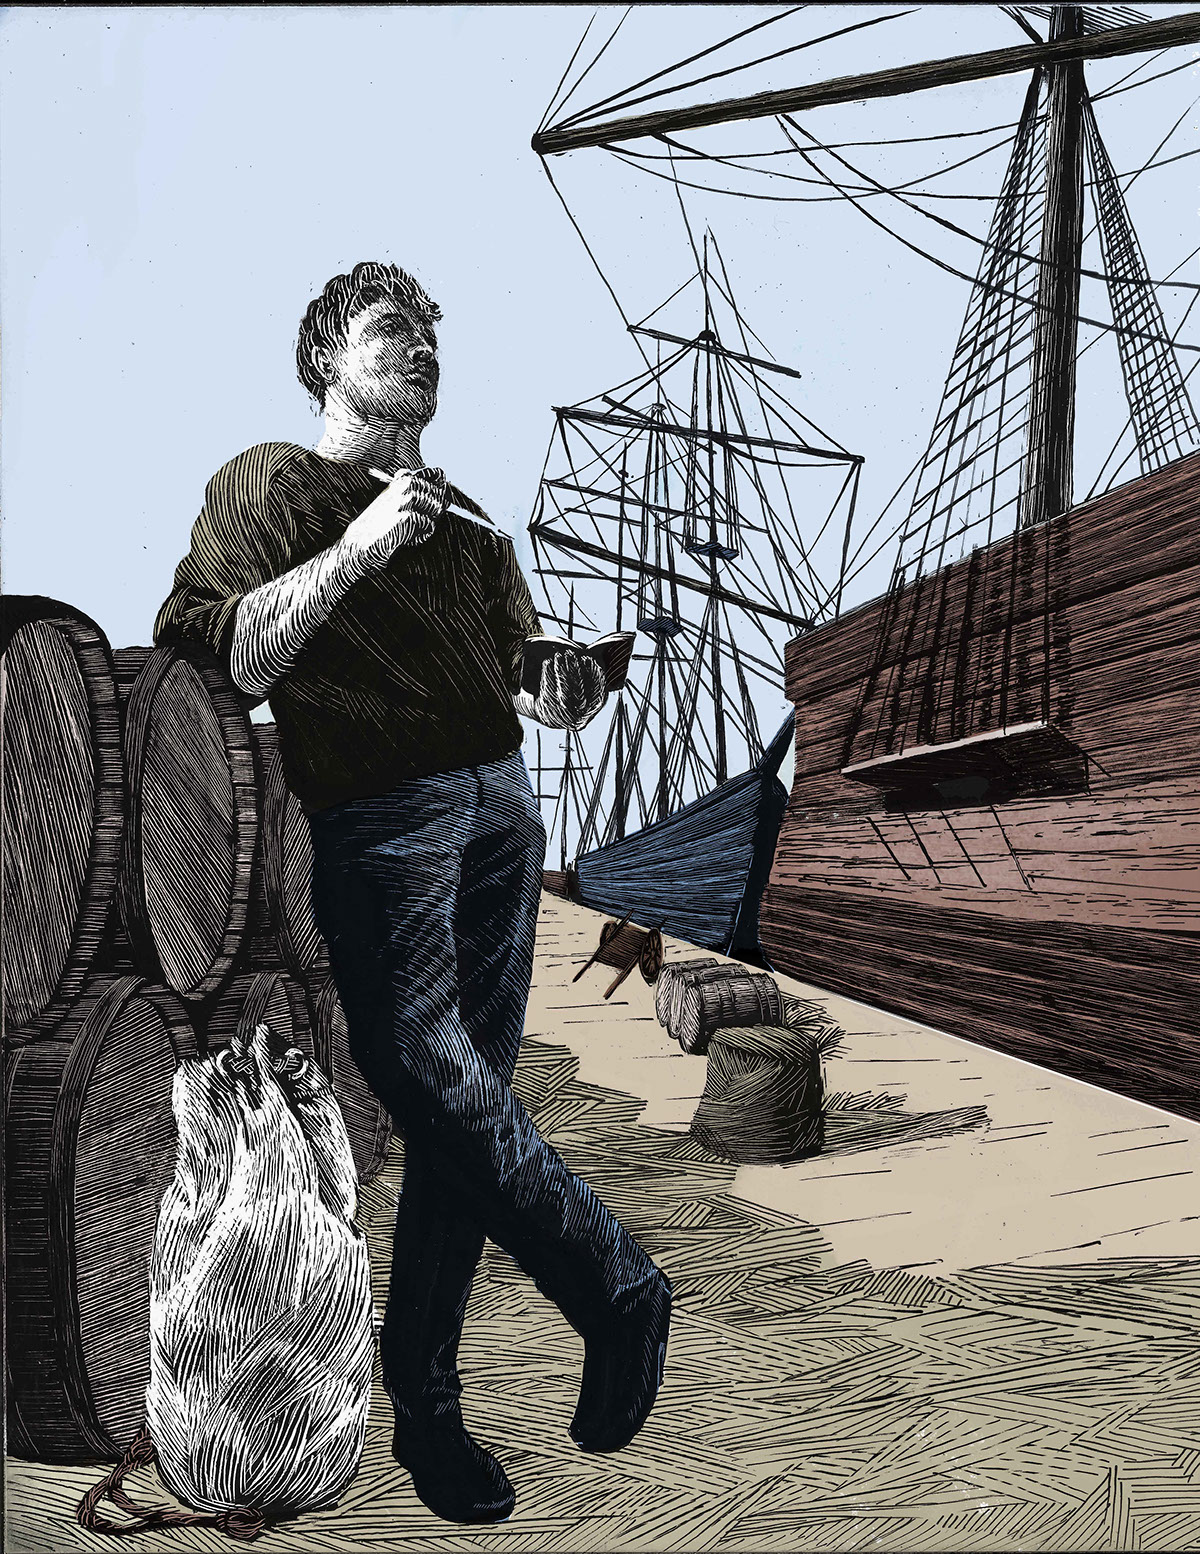 scratchboard literature mobydick herman Melville Ishmael whaling sailing sea pen ink